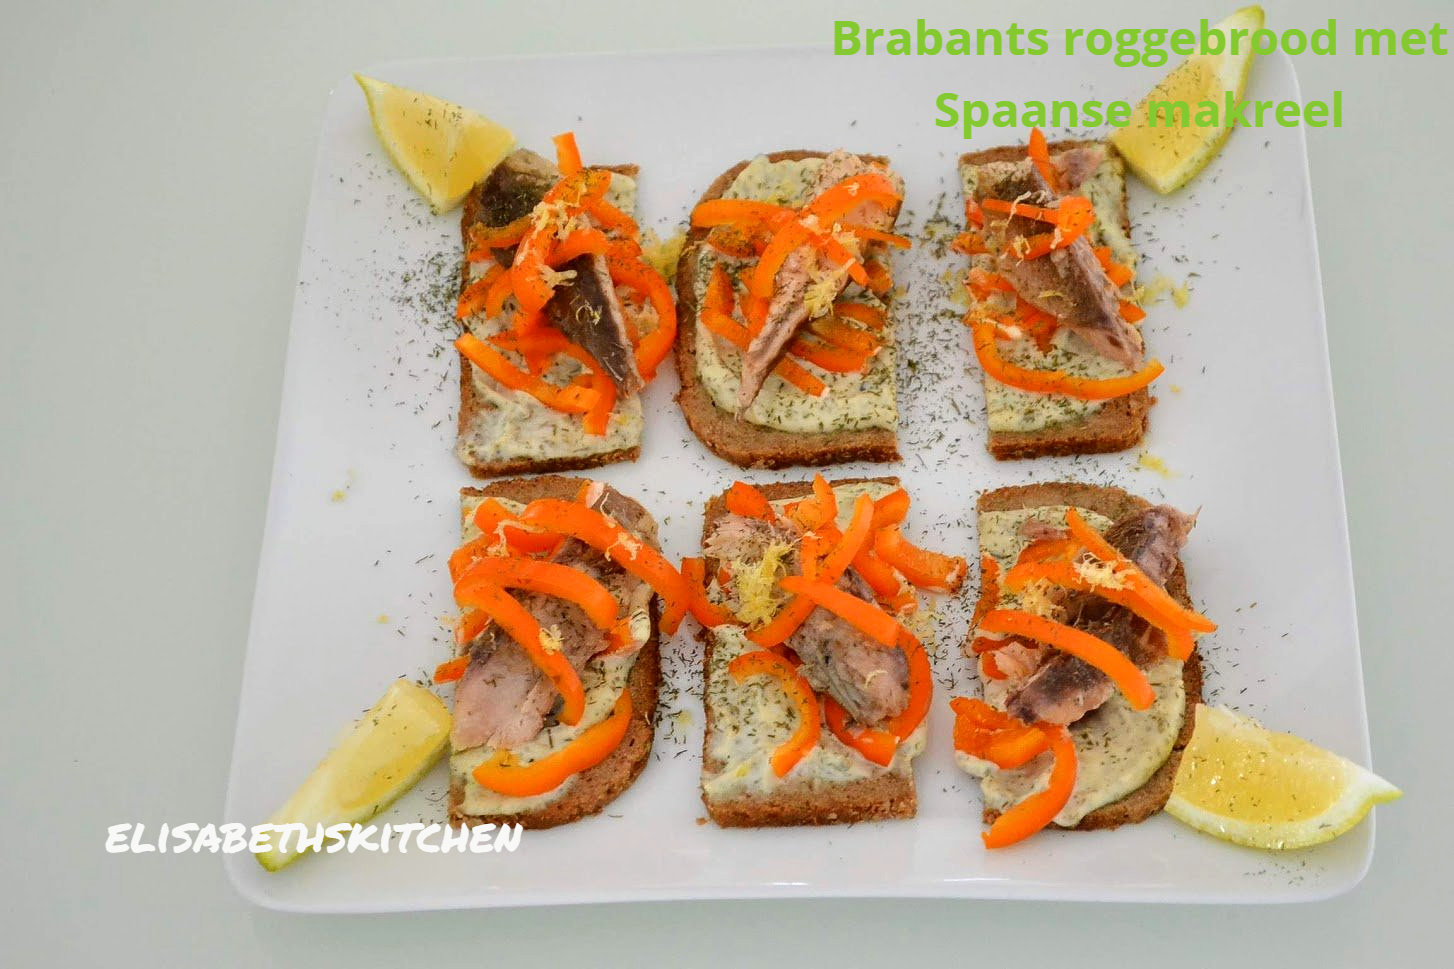 Brabants roggebrook met Spaanse makreel